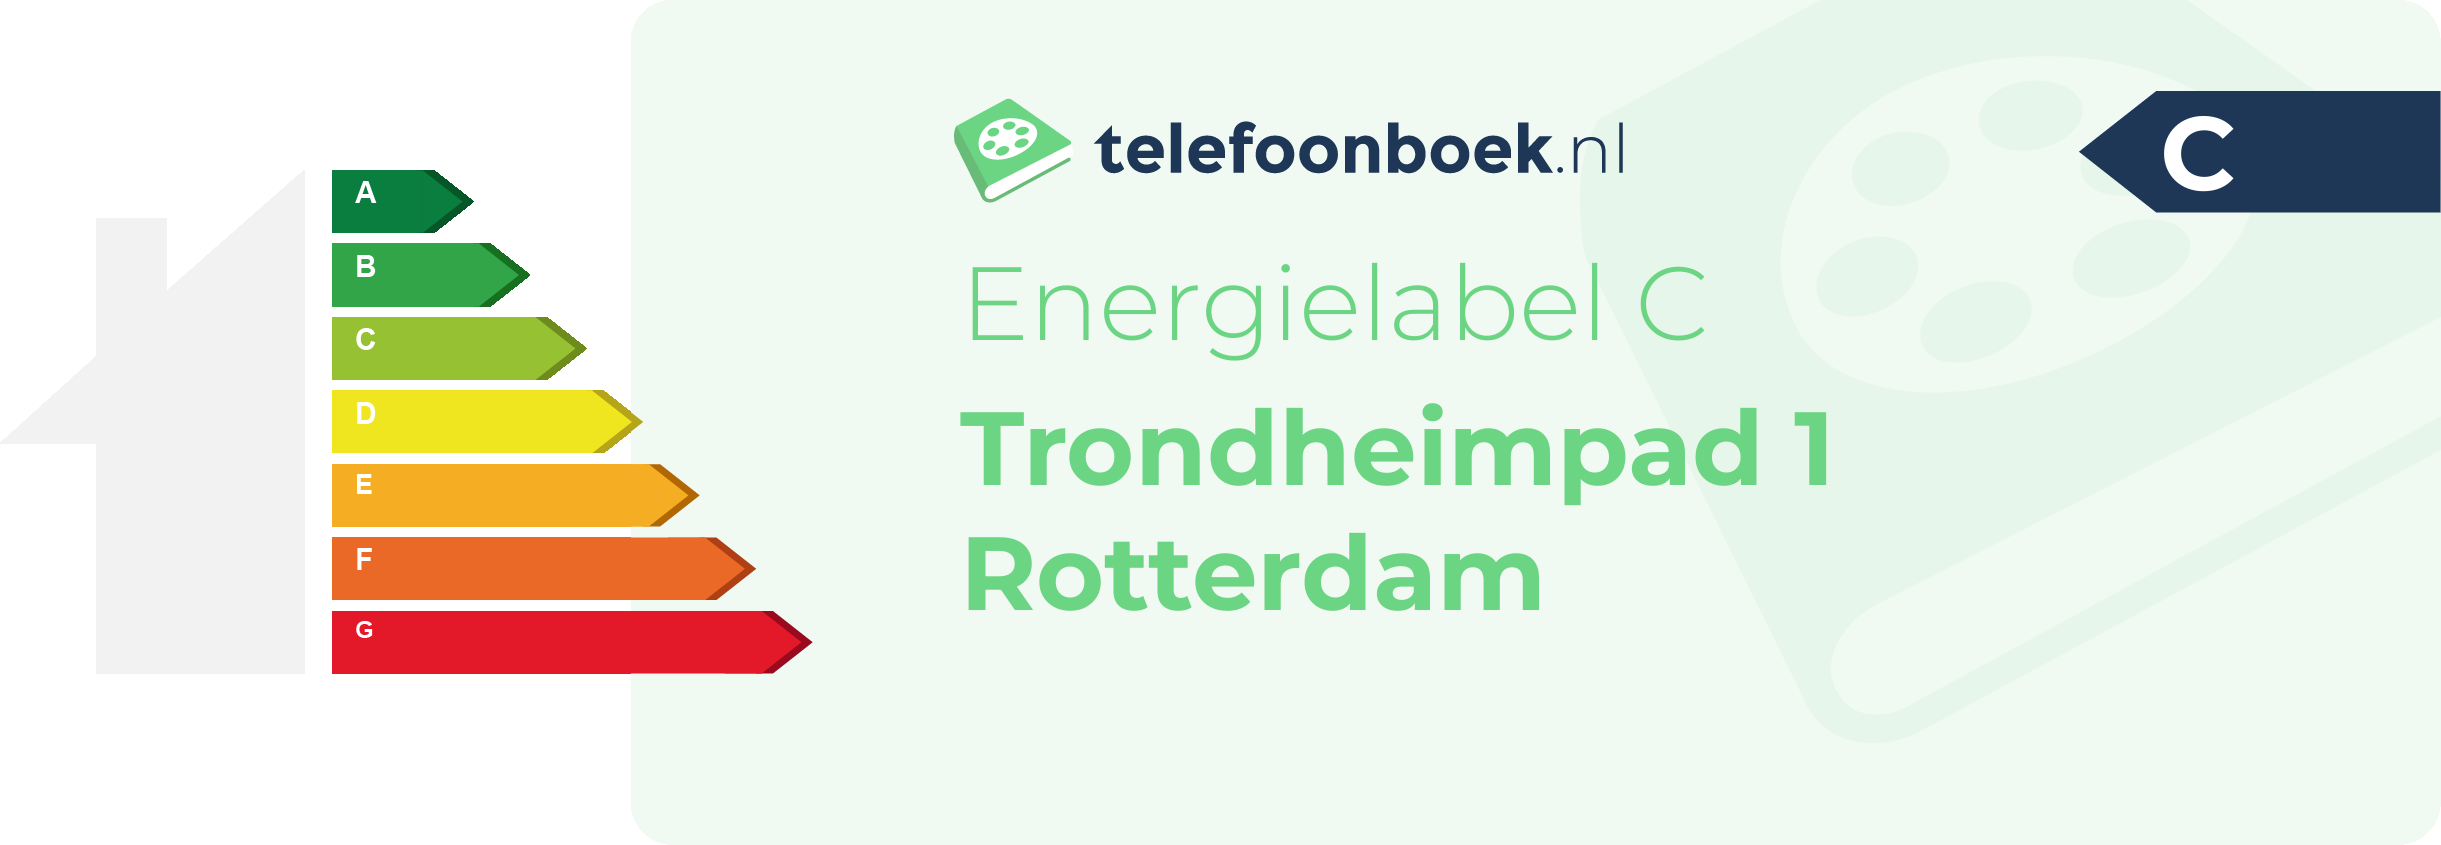 Energielabel Trondheimpad 1 Rotterdam